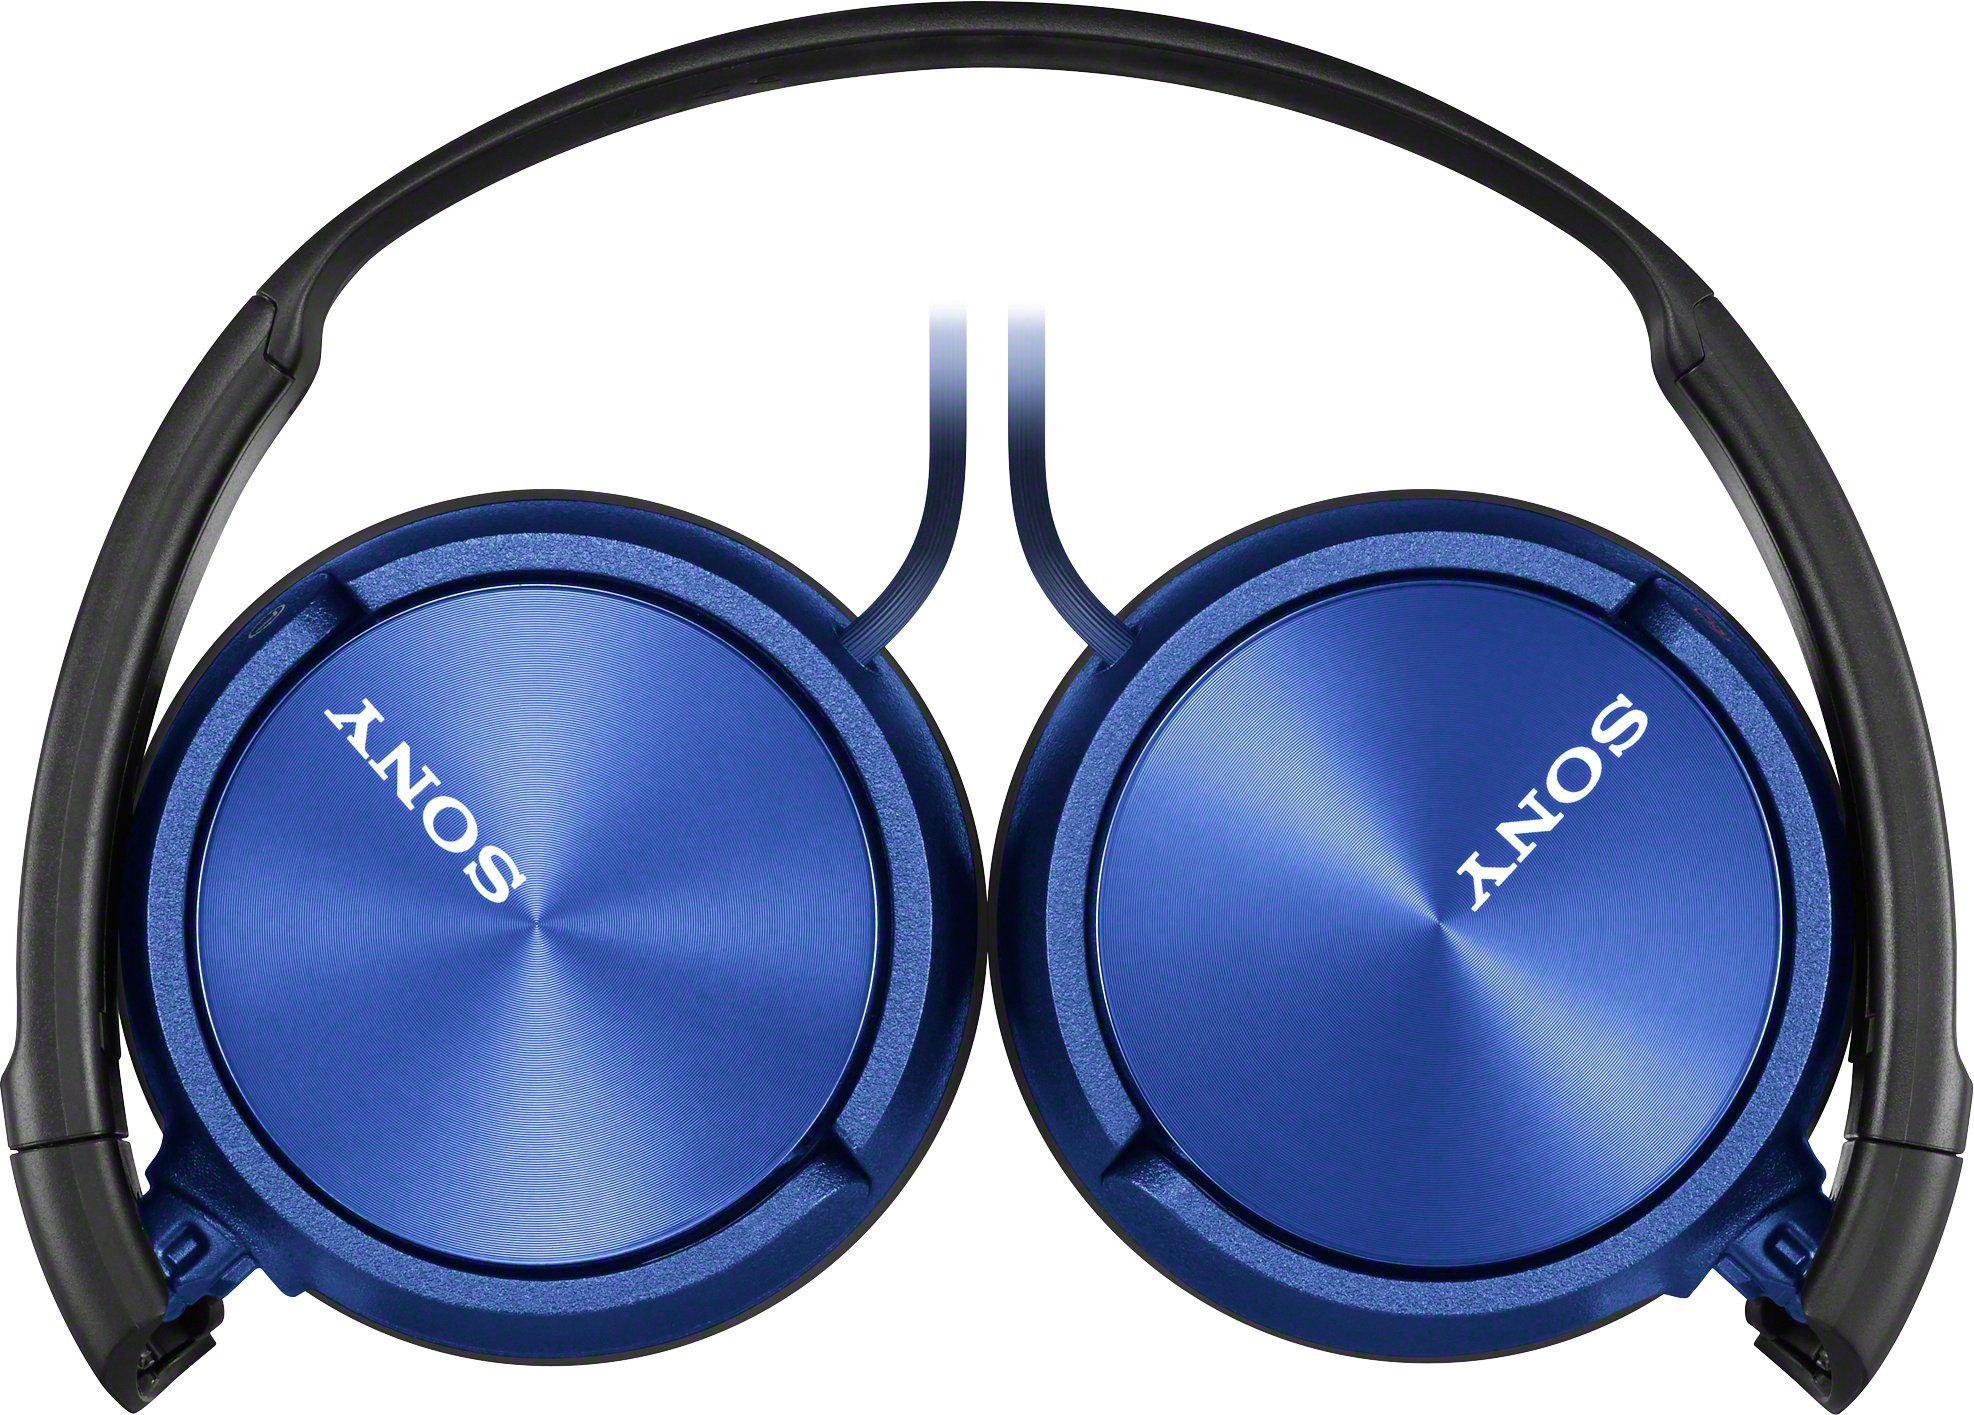 blau Over-Ear-Kopfhörer MDR-ZX310 Sony